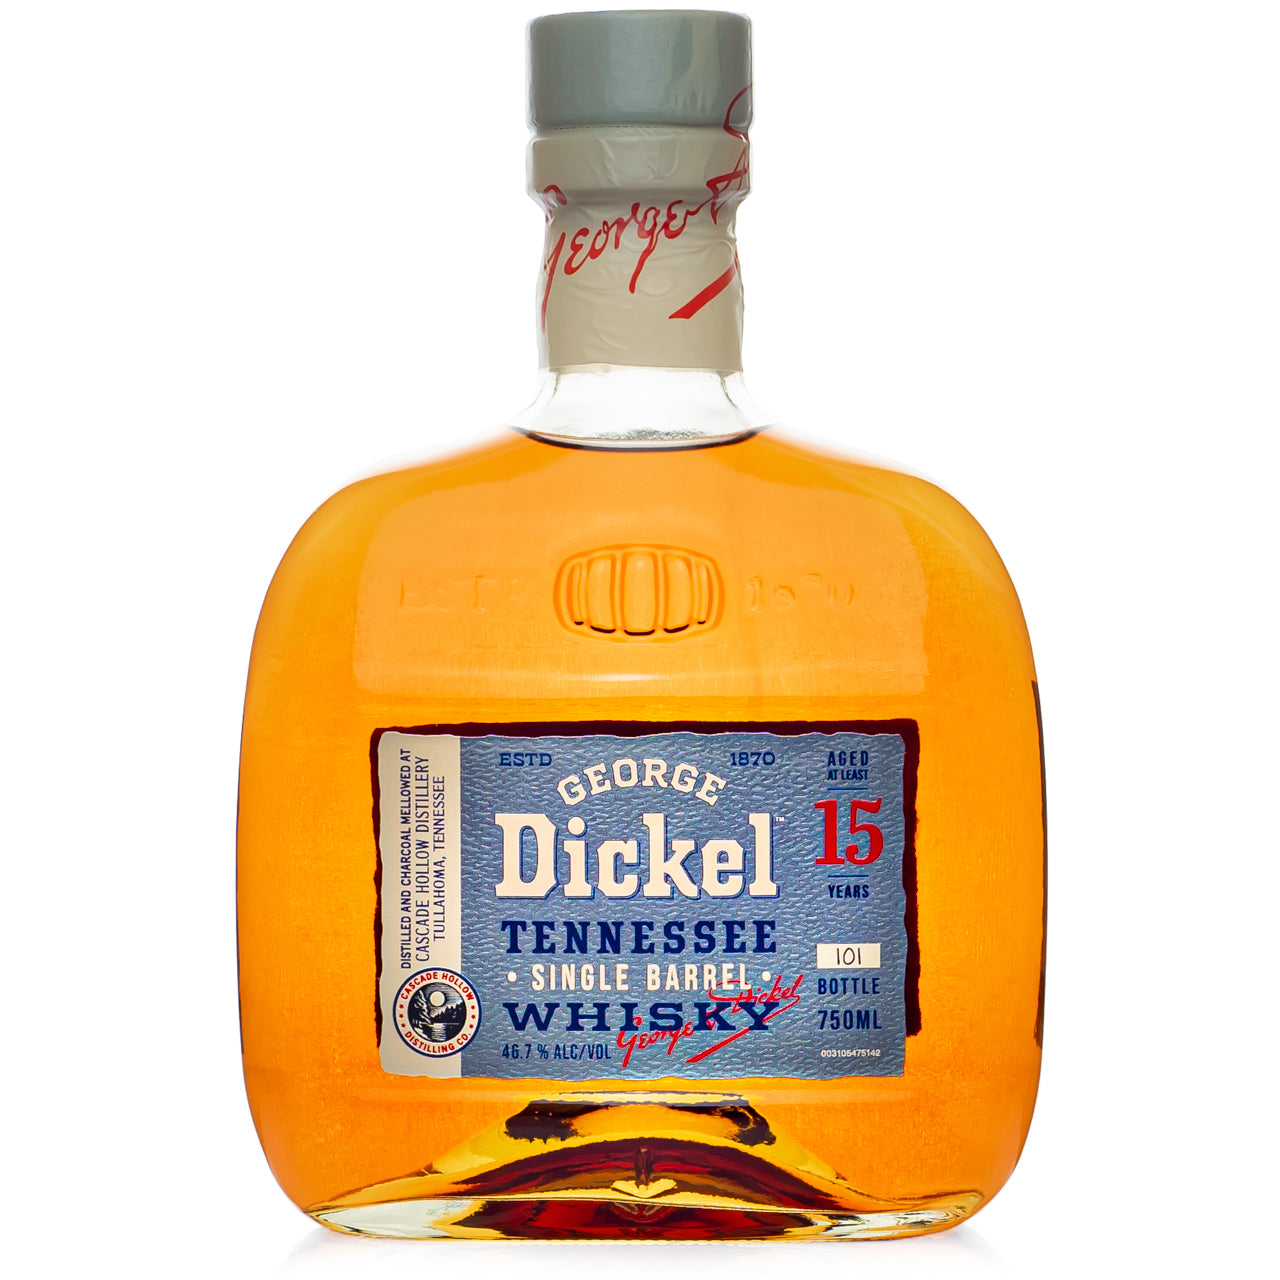 George Dickel "B&B Private Barrel" 15 Year Whiskey